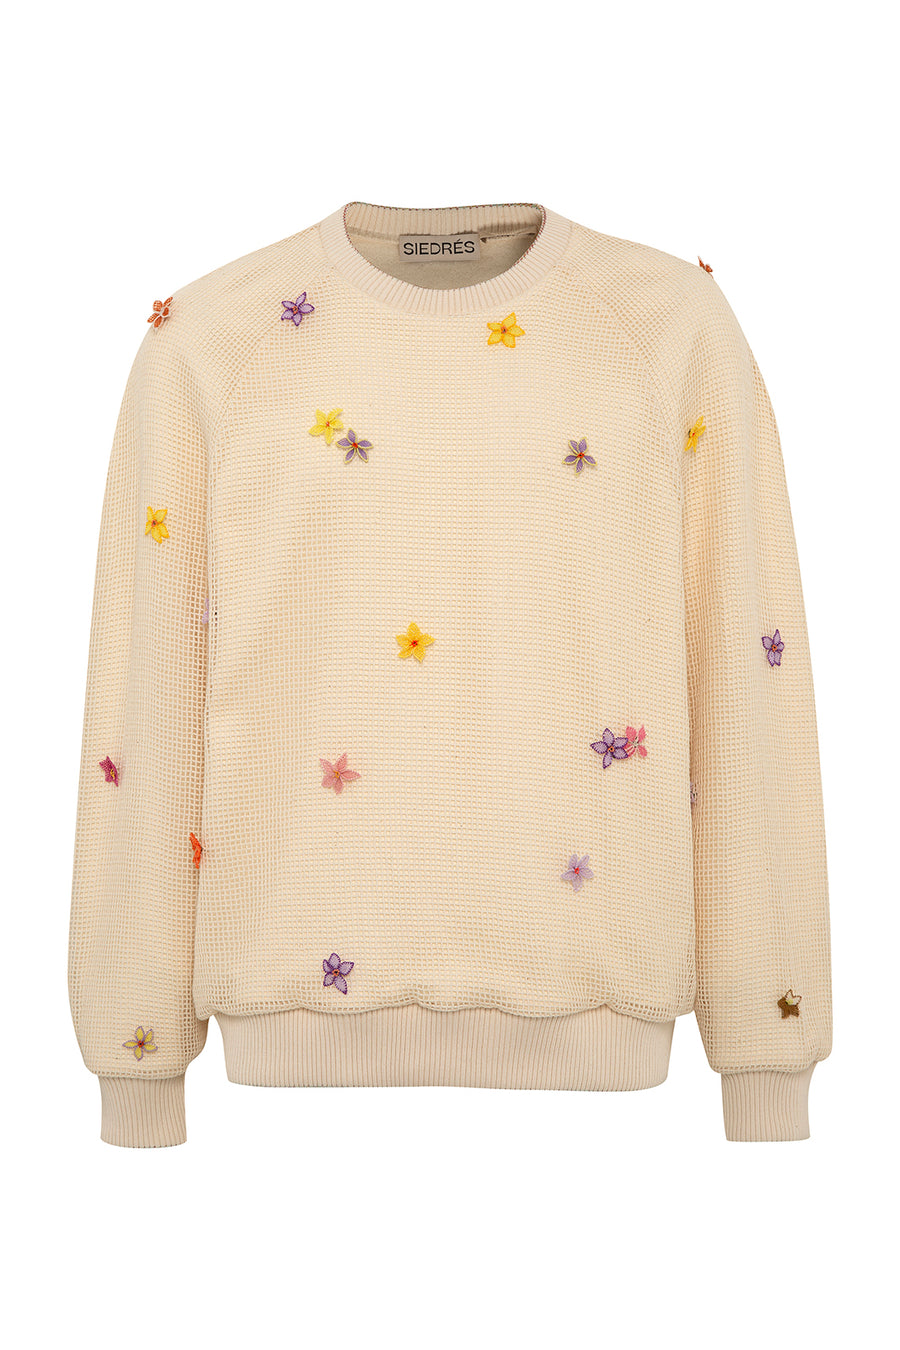 MARC - Crewneck sweatshirt with crocheted flowers